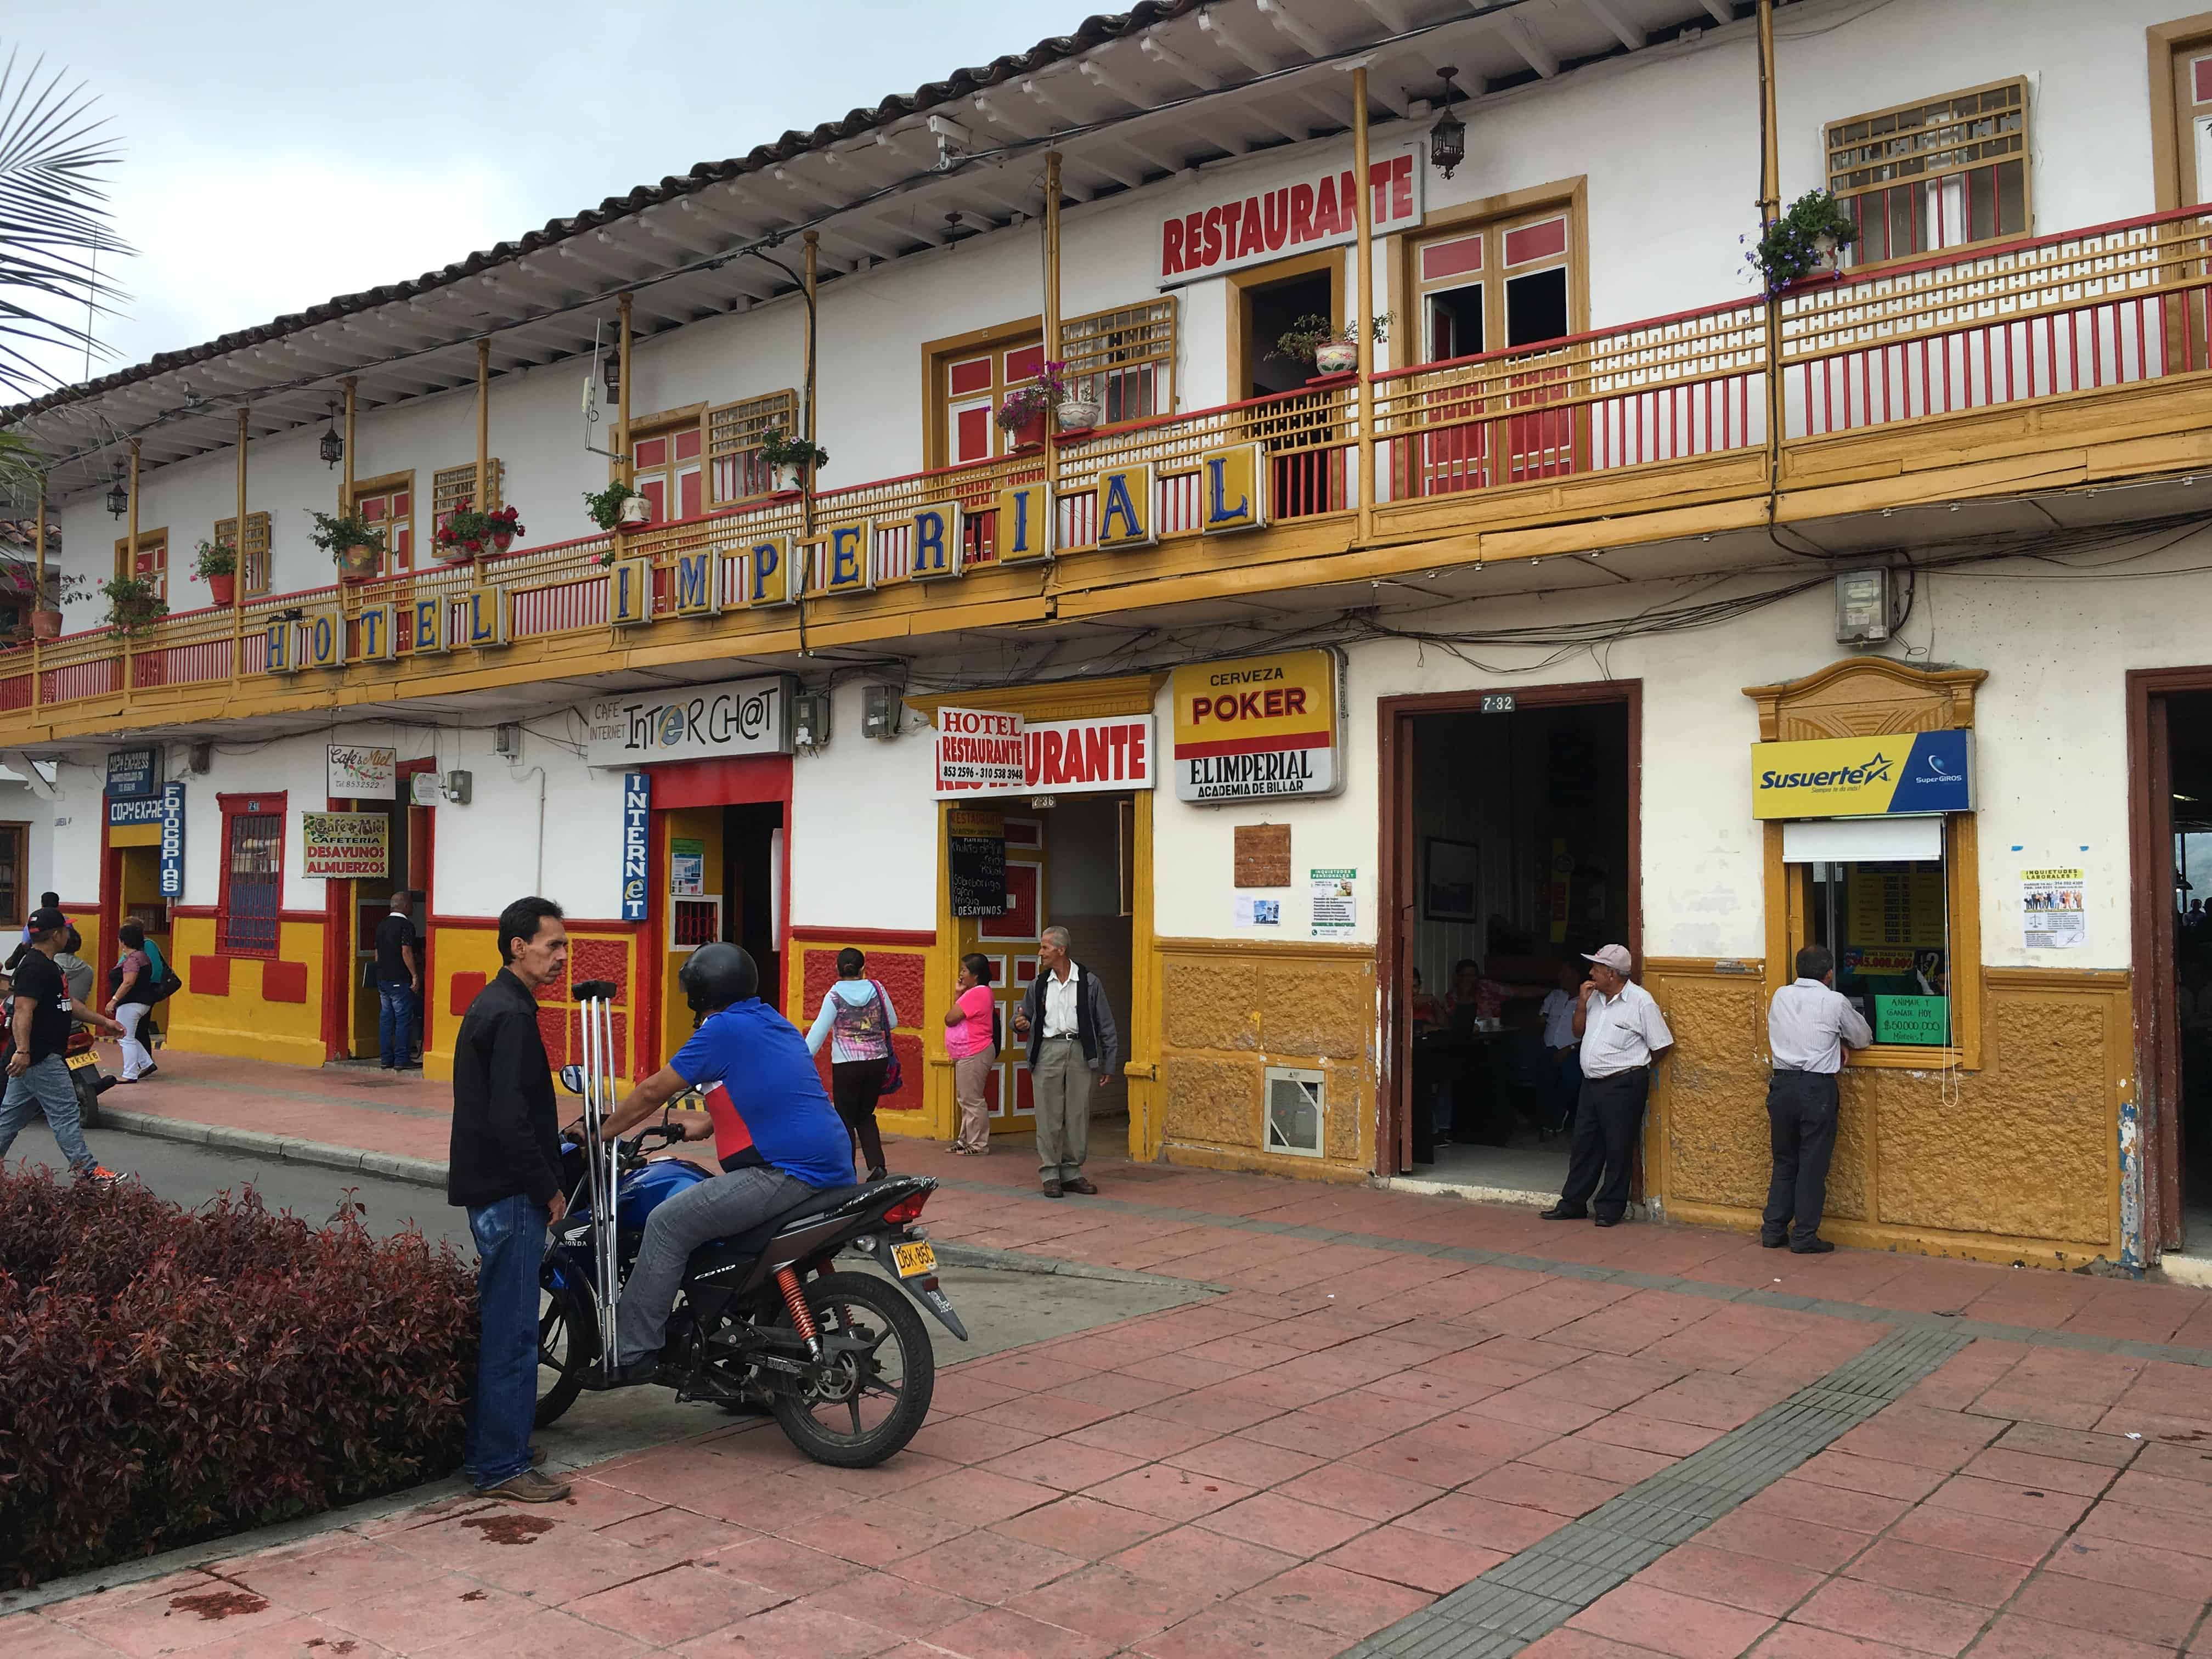 Restaurante Imperial in Anserma, Caldas, Colombia